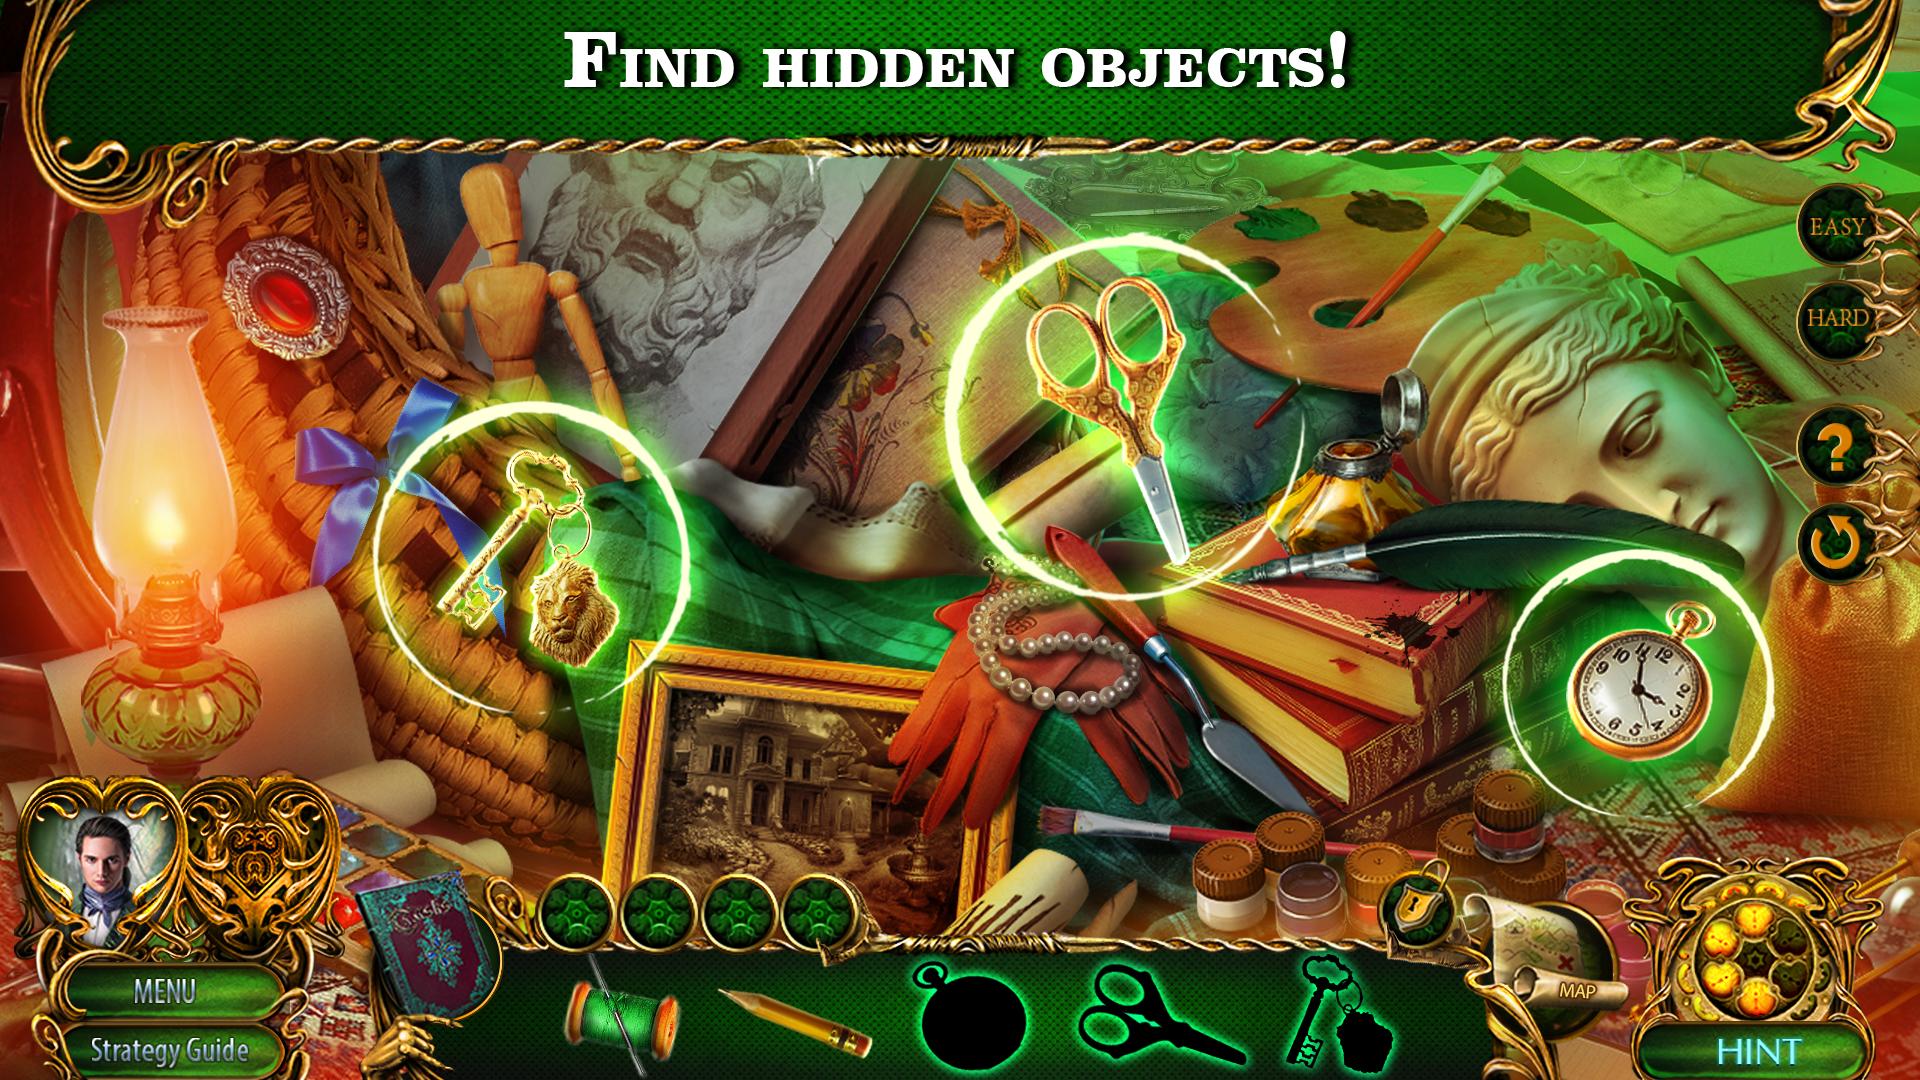 Hidden Objects - Dark Romance 7 (Free To Play) 1.0.5 Screenshot 1